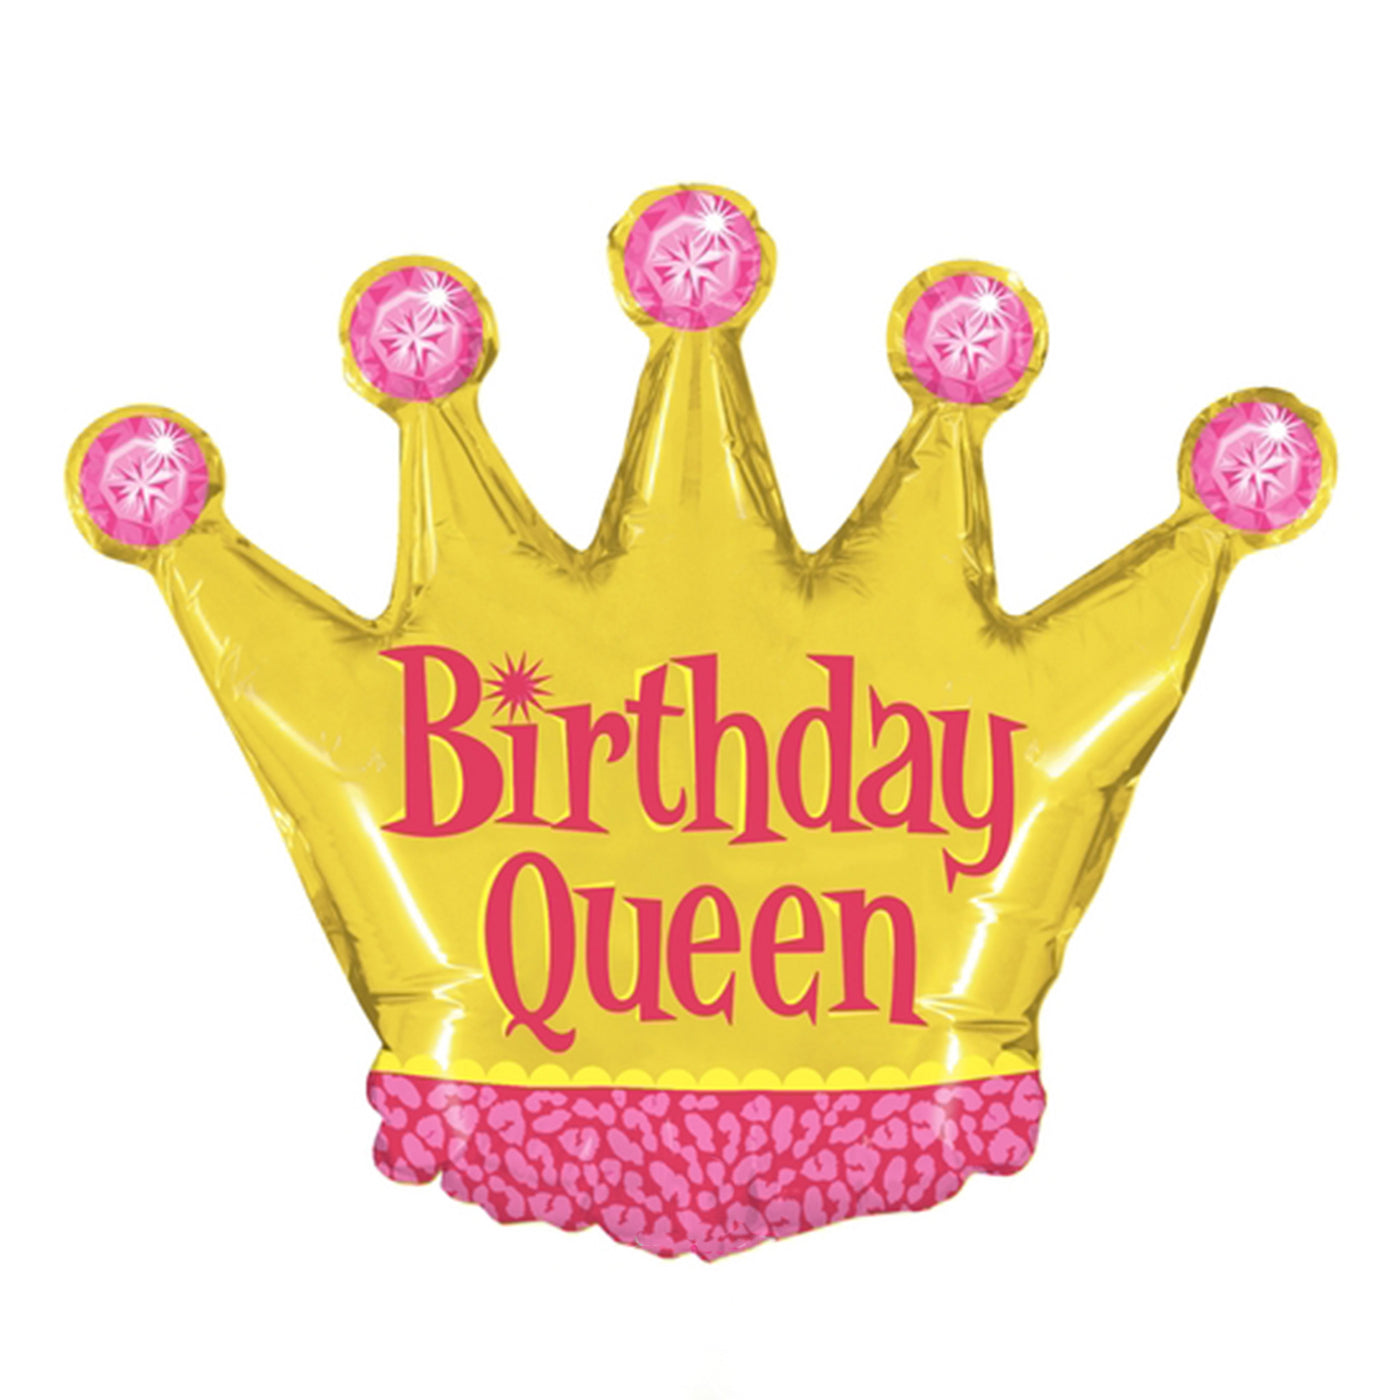 Birthday Queen Balloon